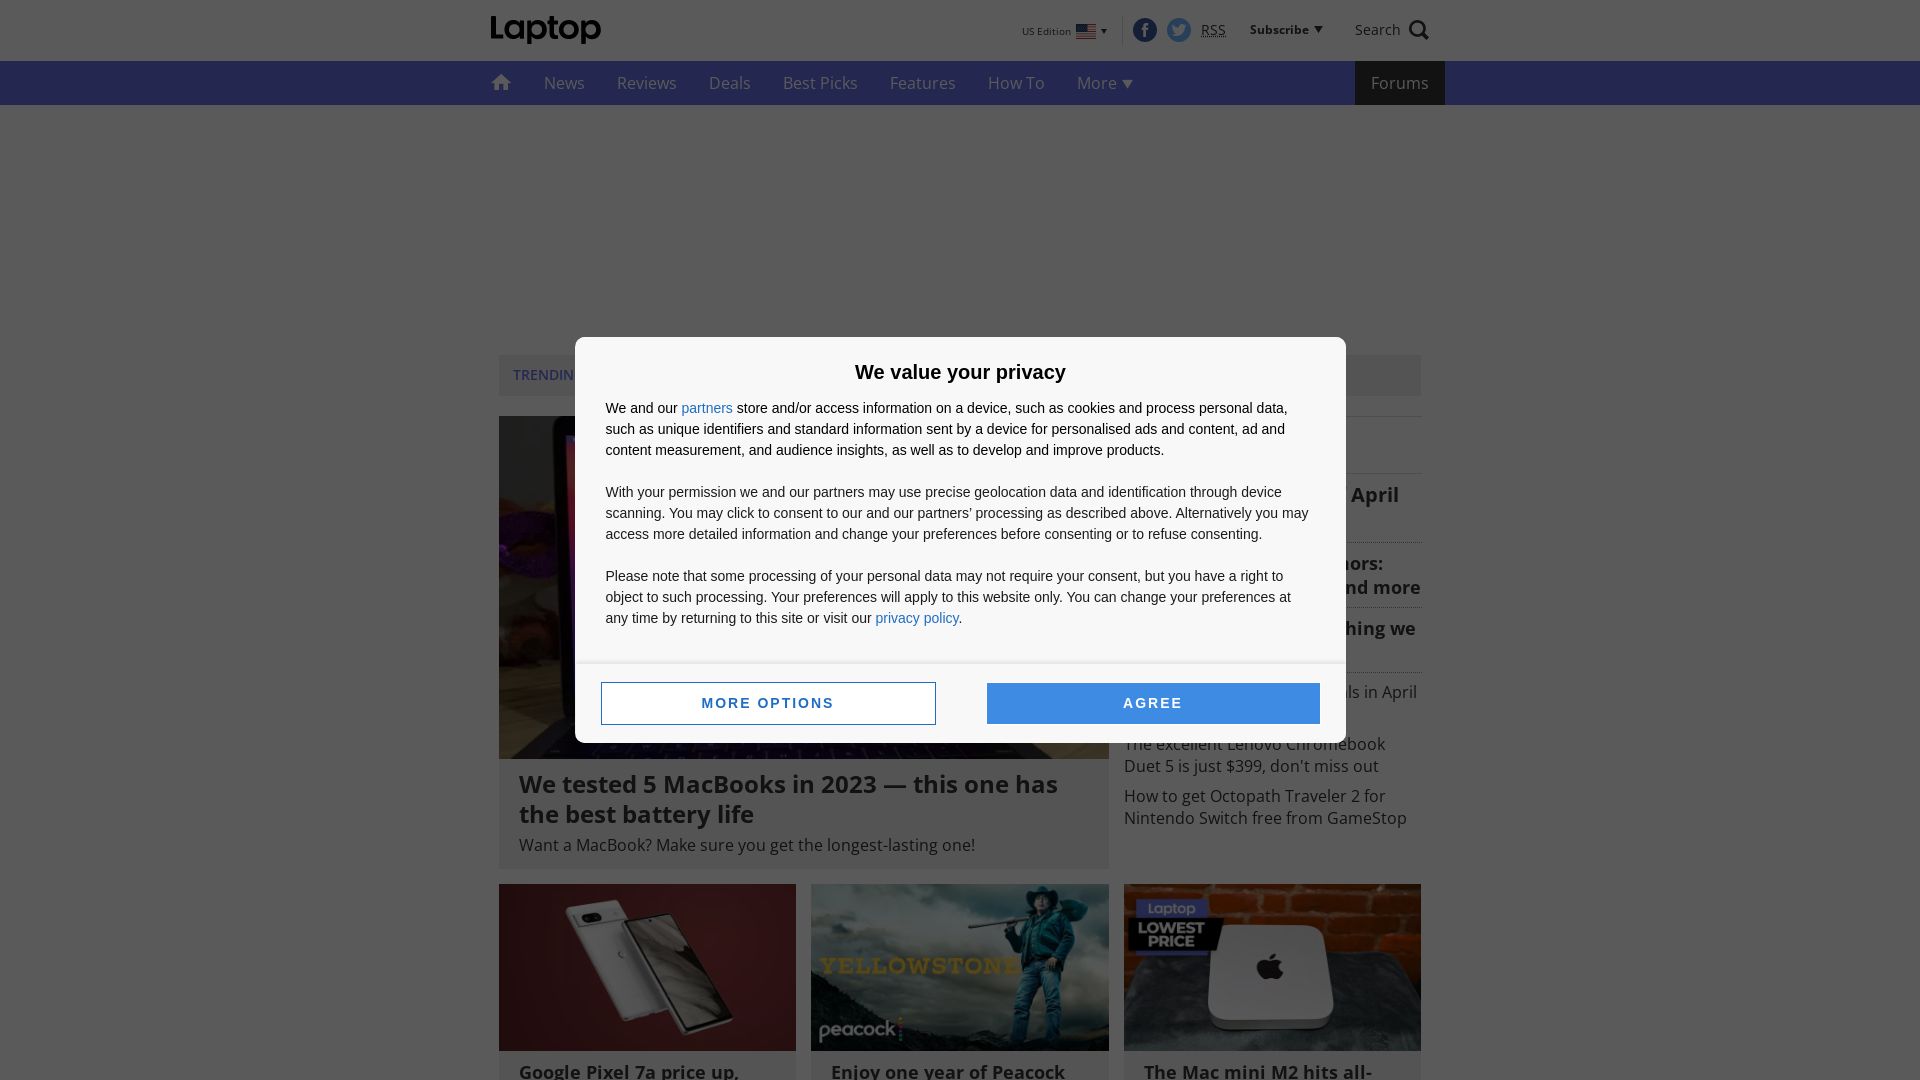 Website status laptopmag.com is   ONLINE